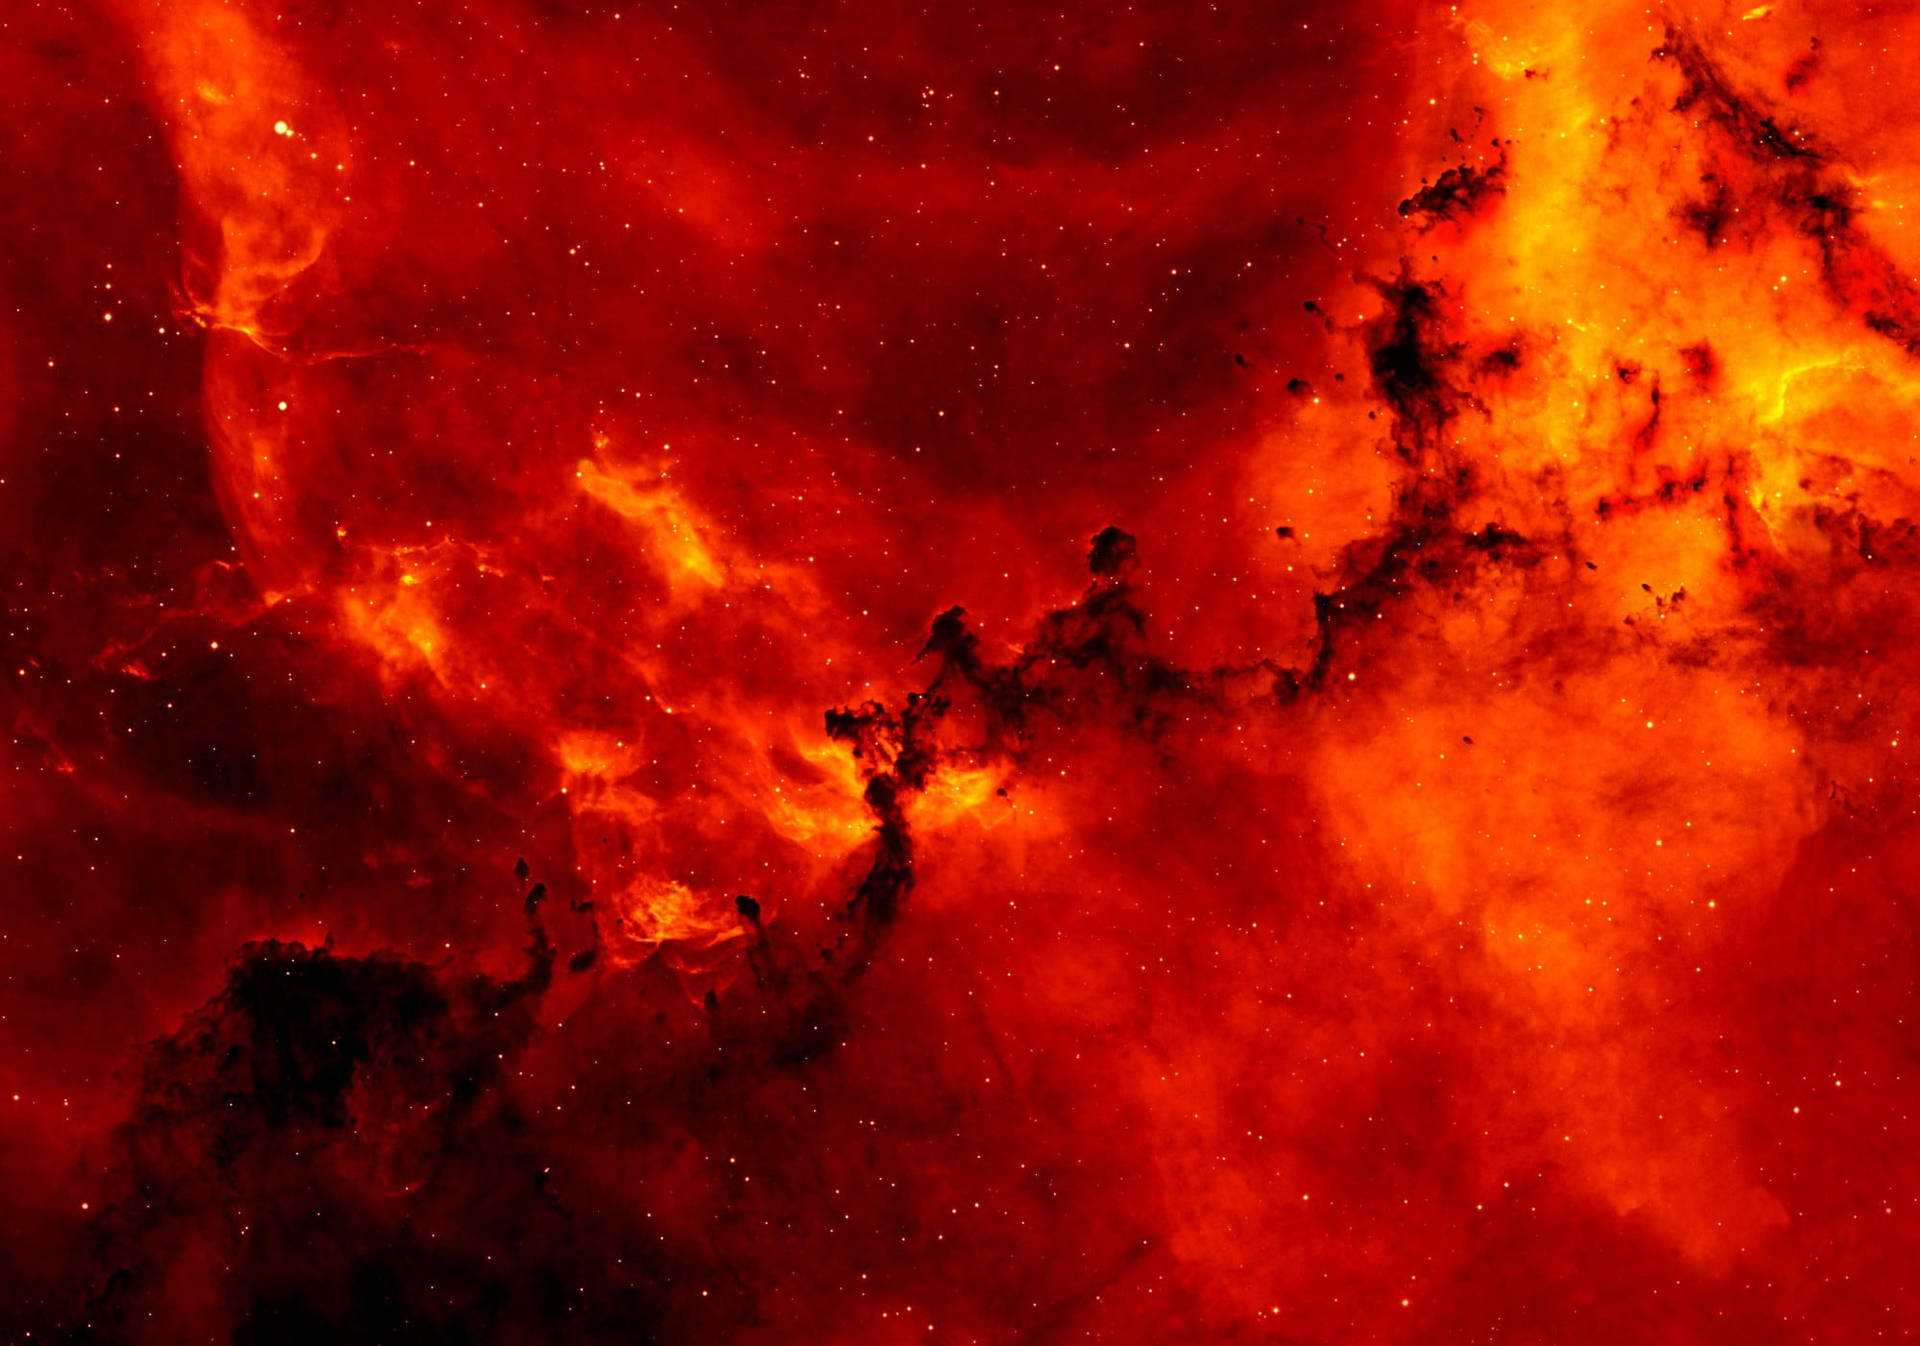 Cosmic Red Fire In Space Wallpaper